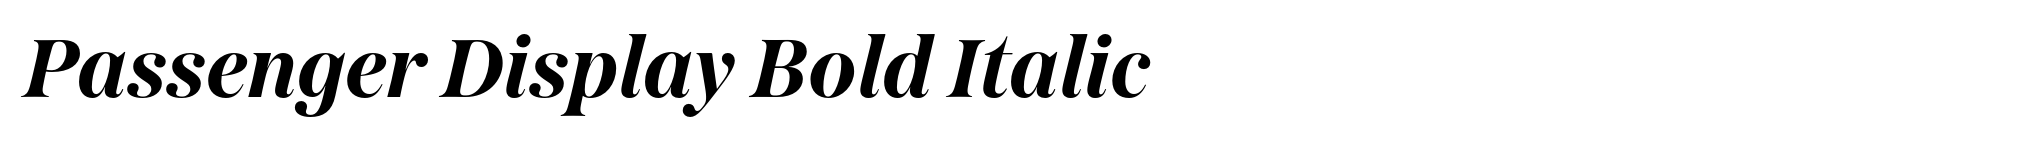 Passenger Display Bold Italic image